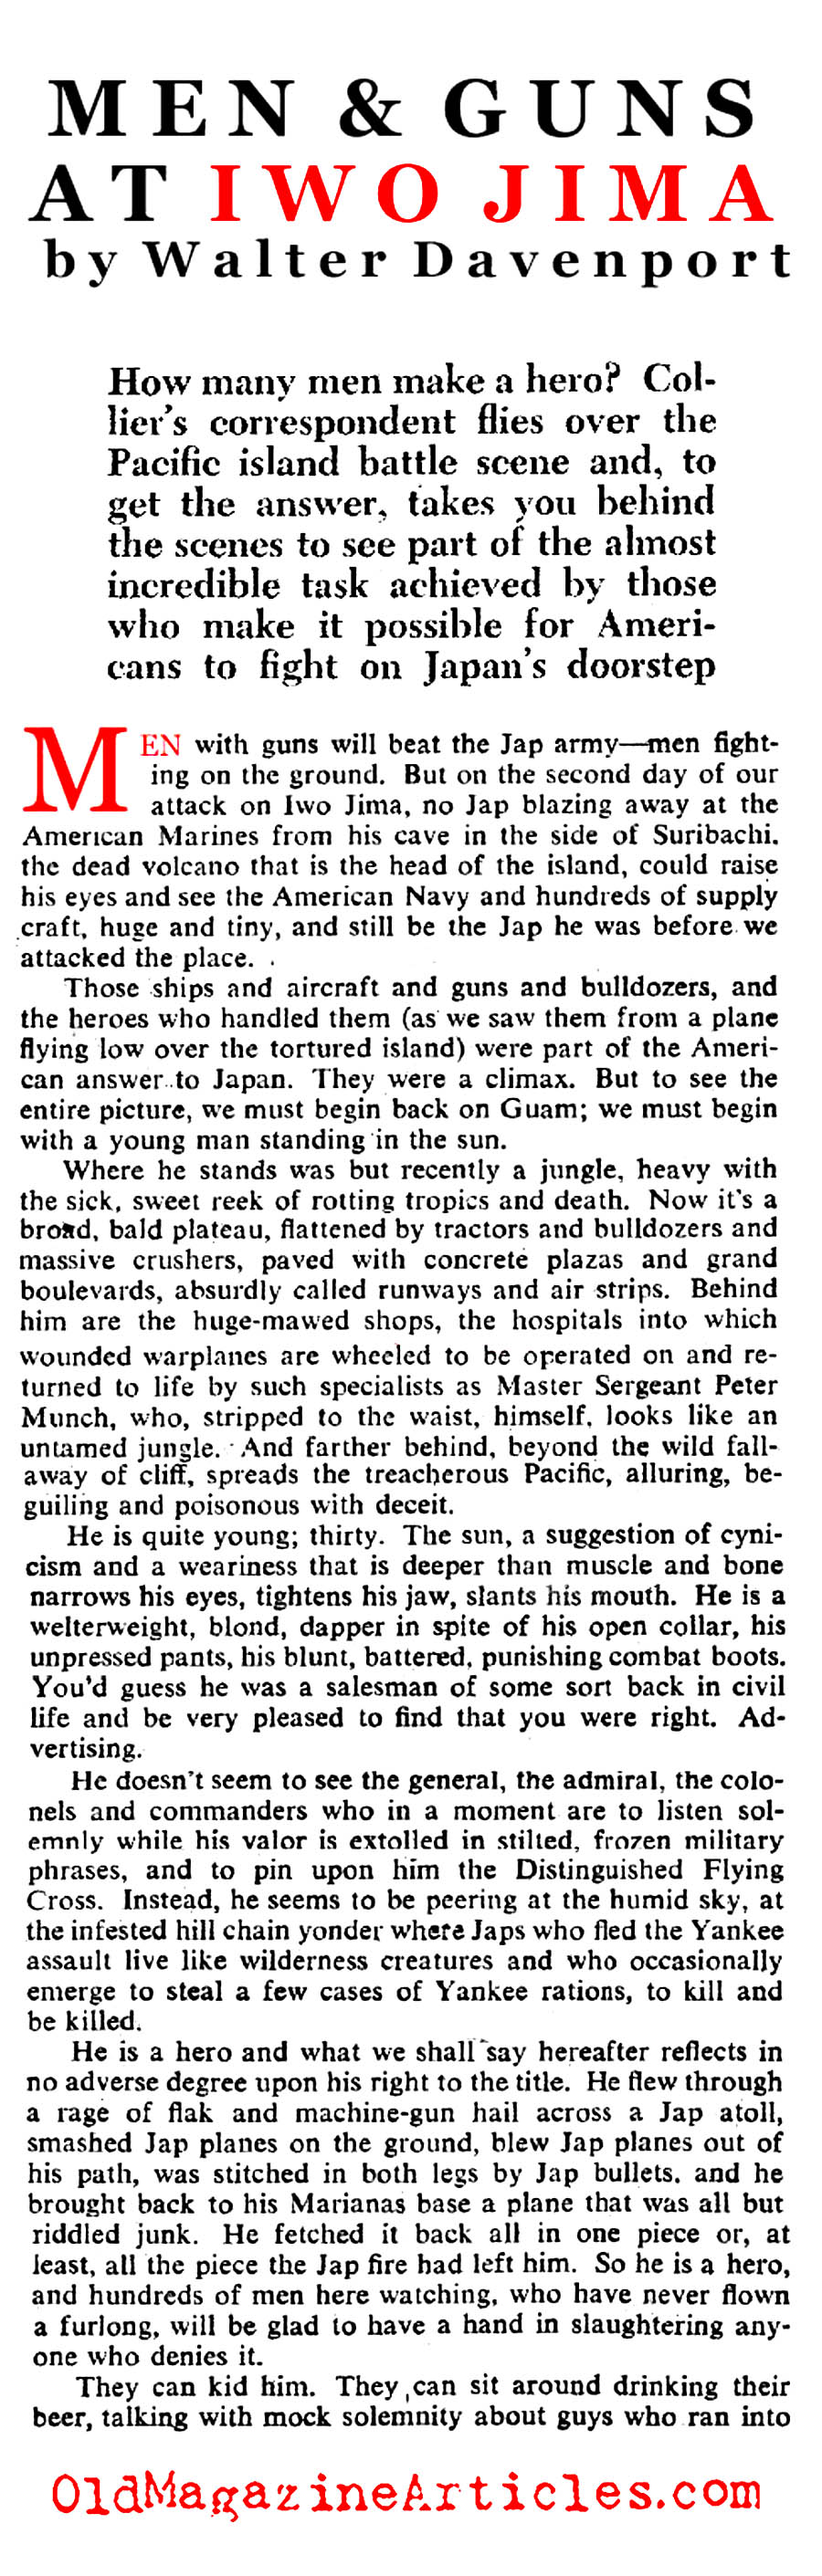 The Iwo Jima Invasion (Collier's Magazine, 1945)